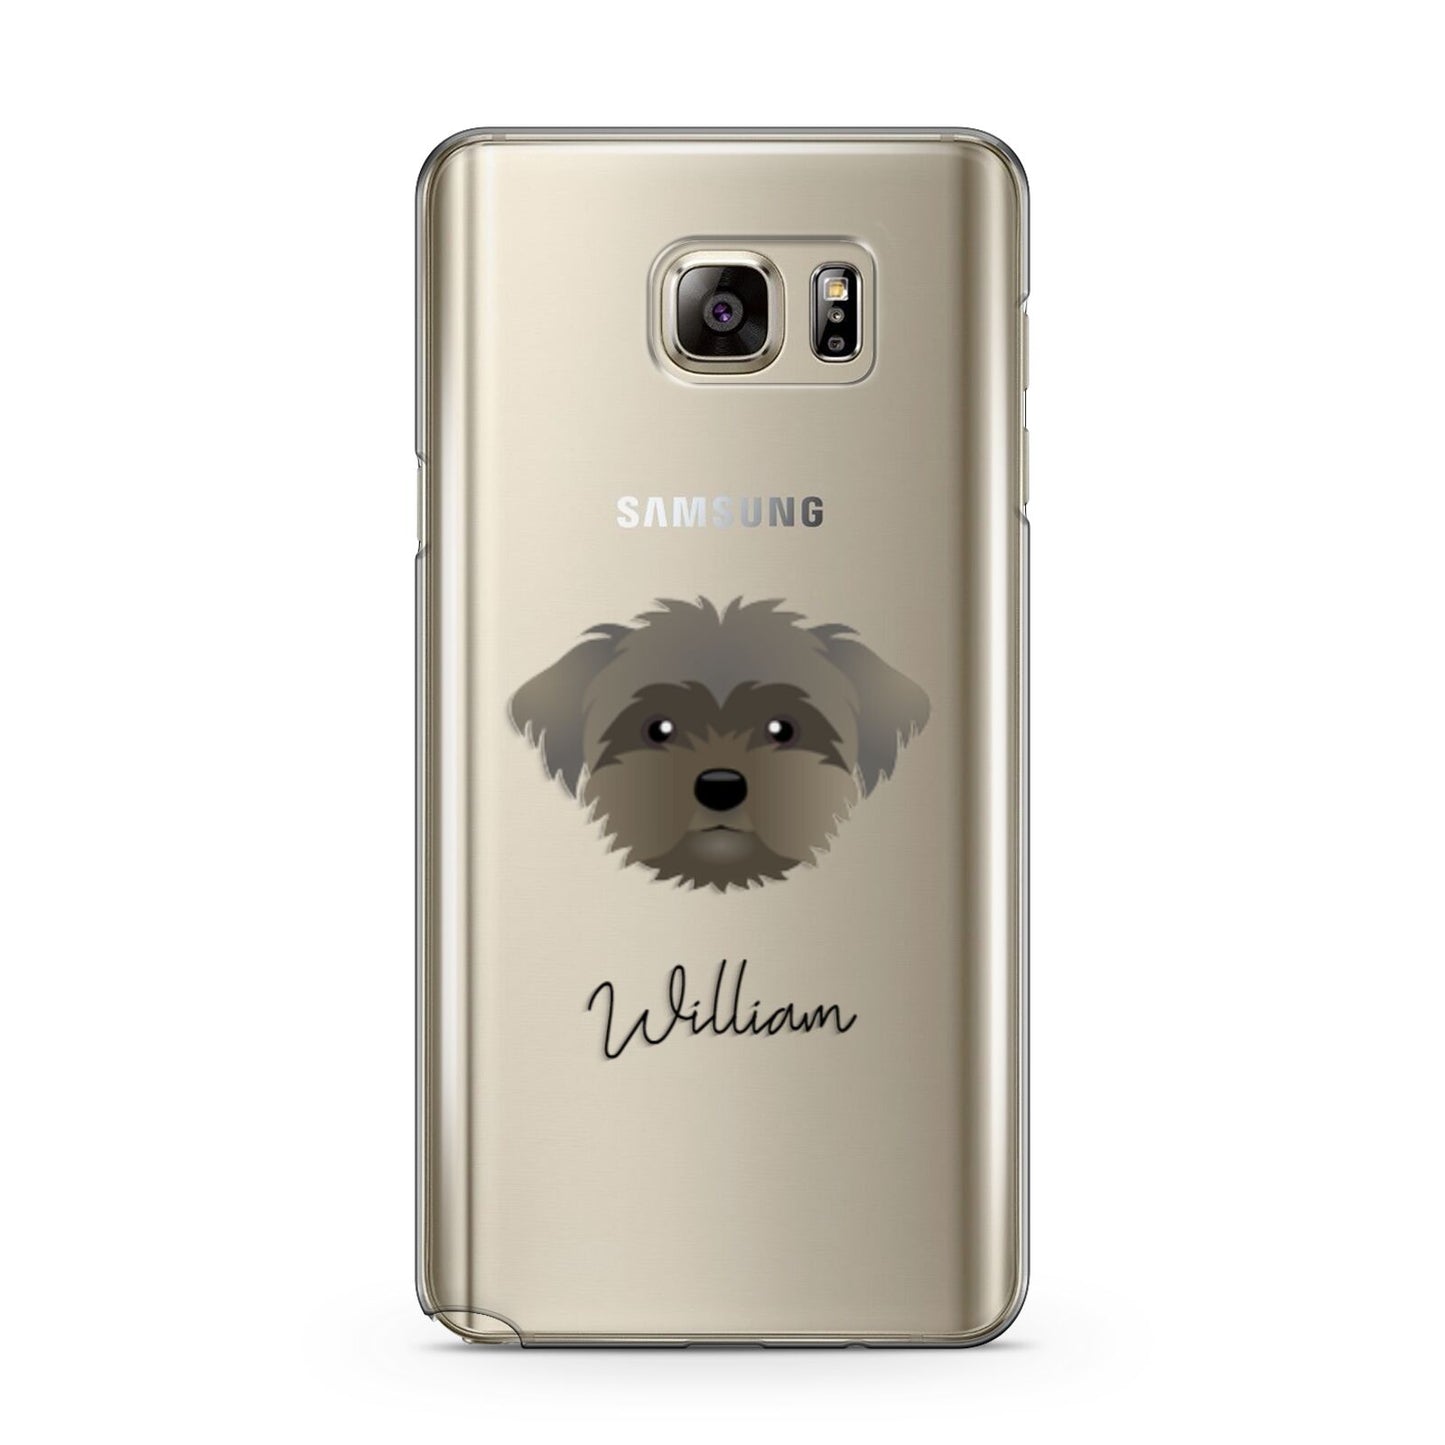 Peek a poo Personalised Samsung Galaxy Note 5 Case